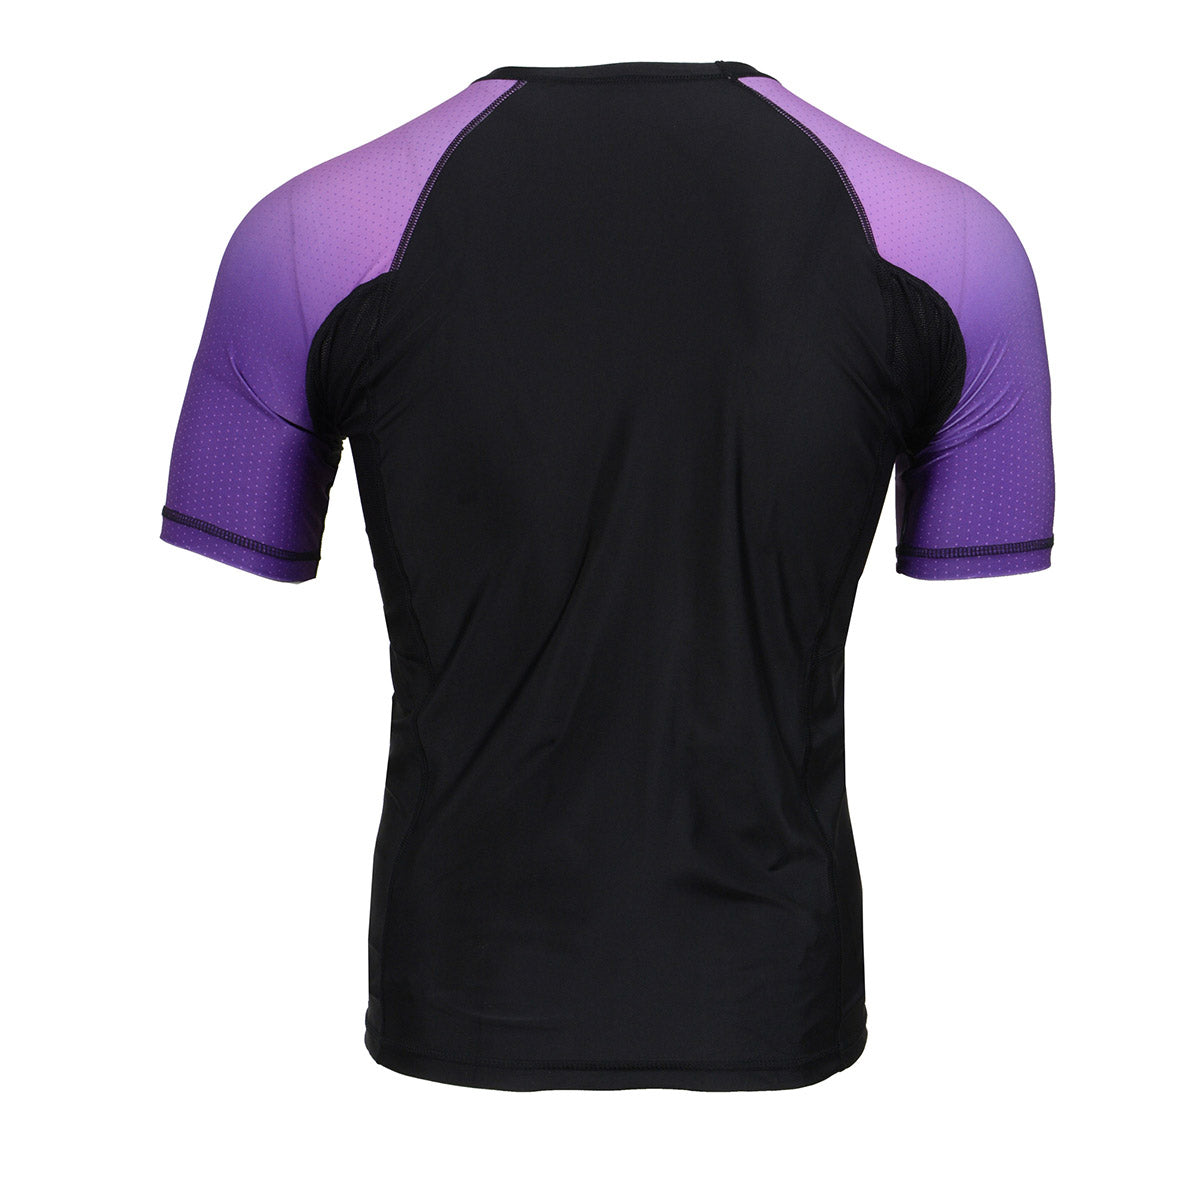 X-Fitness XFM7001 Men's Black and Purple Short Sleeve Compression Rash Guard Athletic Shirt- MMA, BJJ, Wrestling, Cross Training